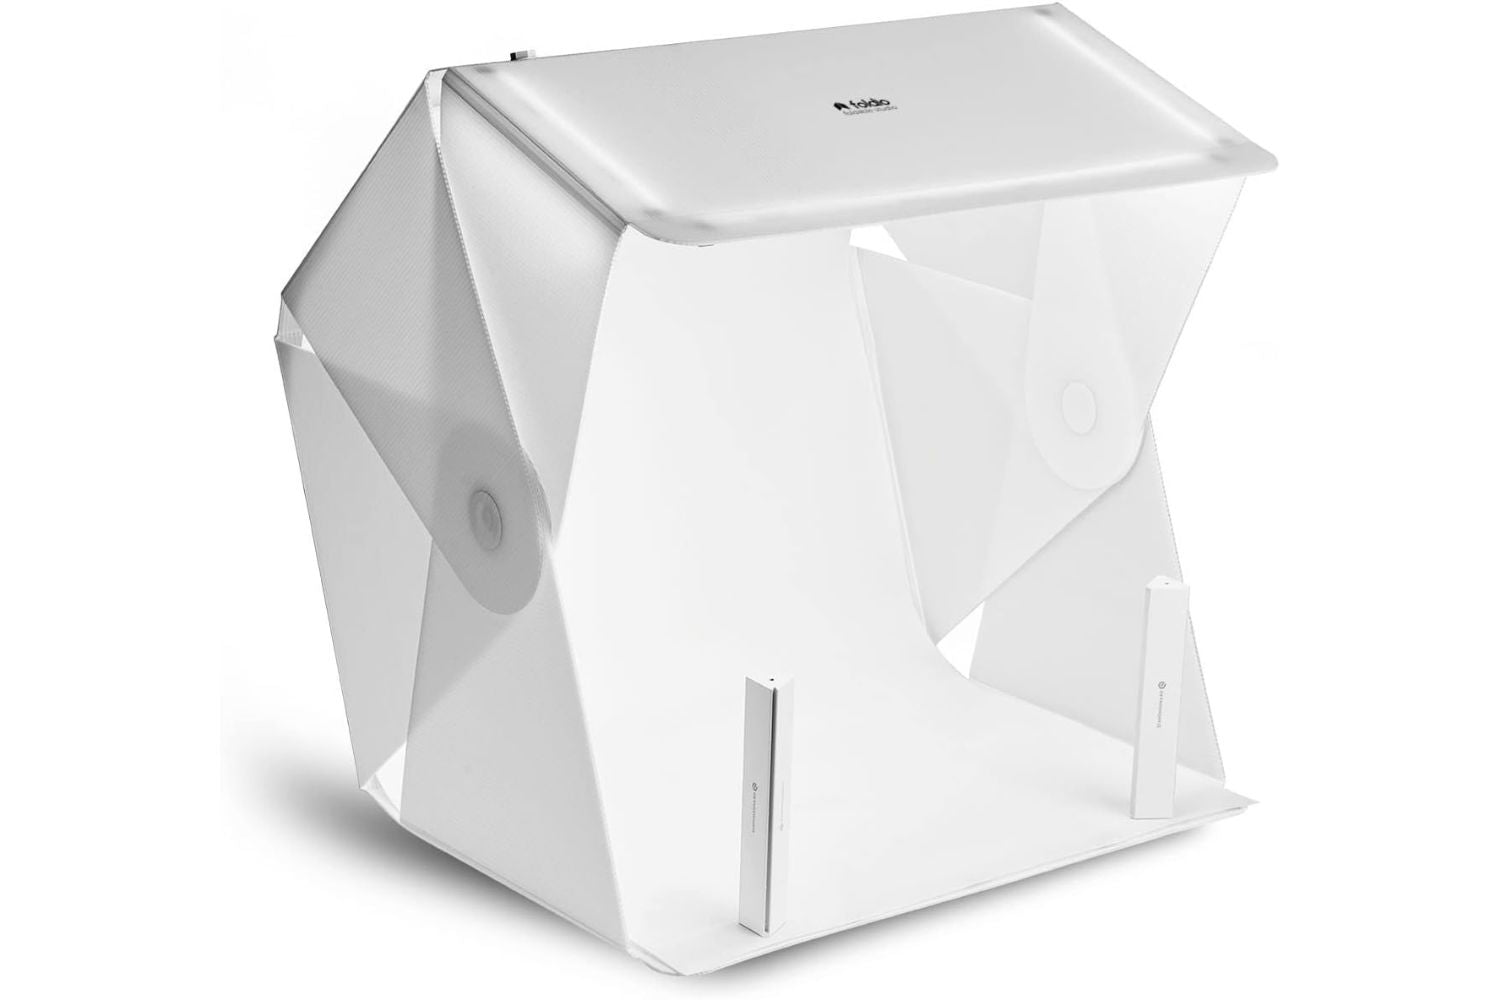 Foldio 3 Light Box: Best Simplified Option